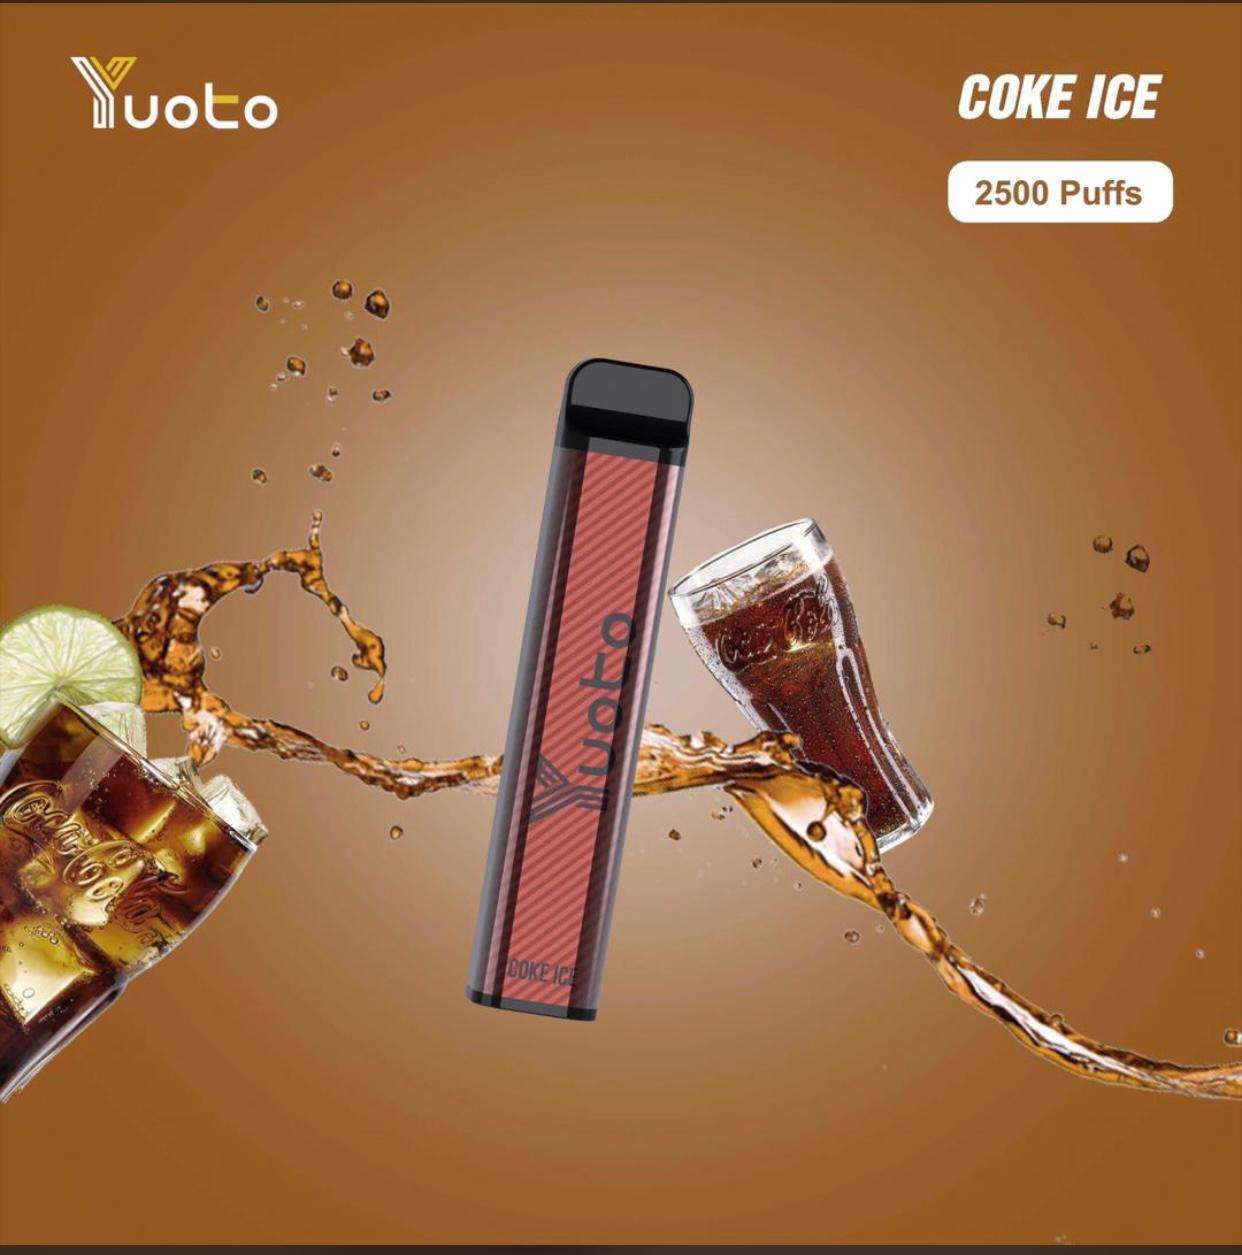 yuoto xxl disposable coke ice 2500 puffs Vape Dubai | Buy Vape Online in UAE - SmokeFree